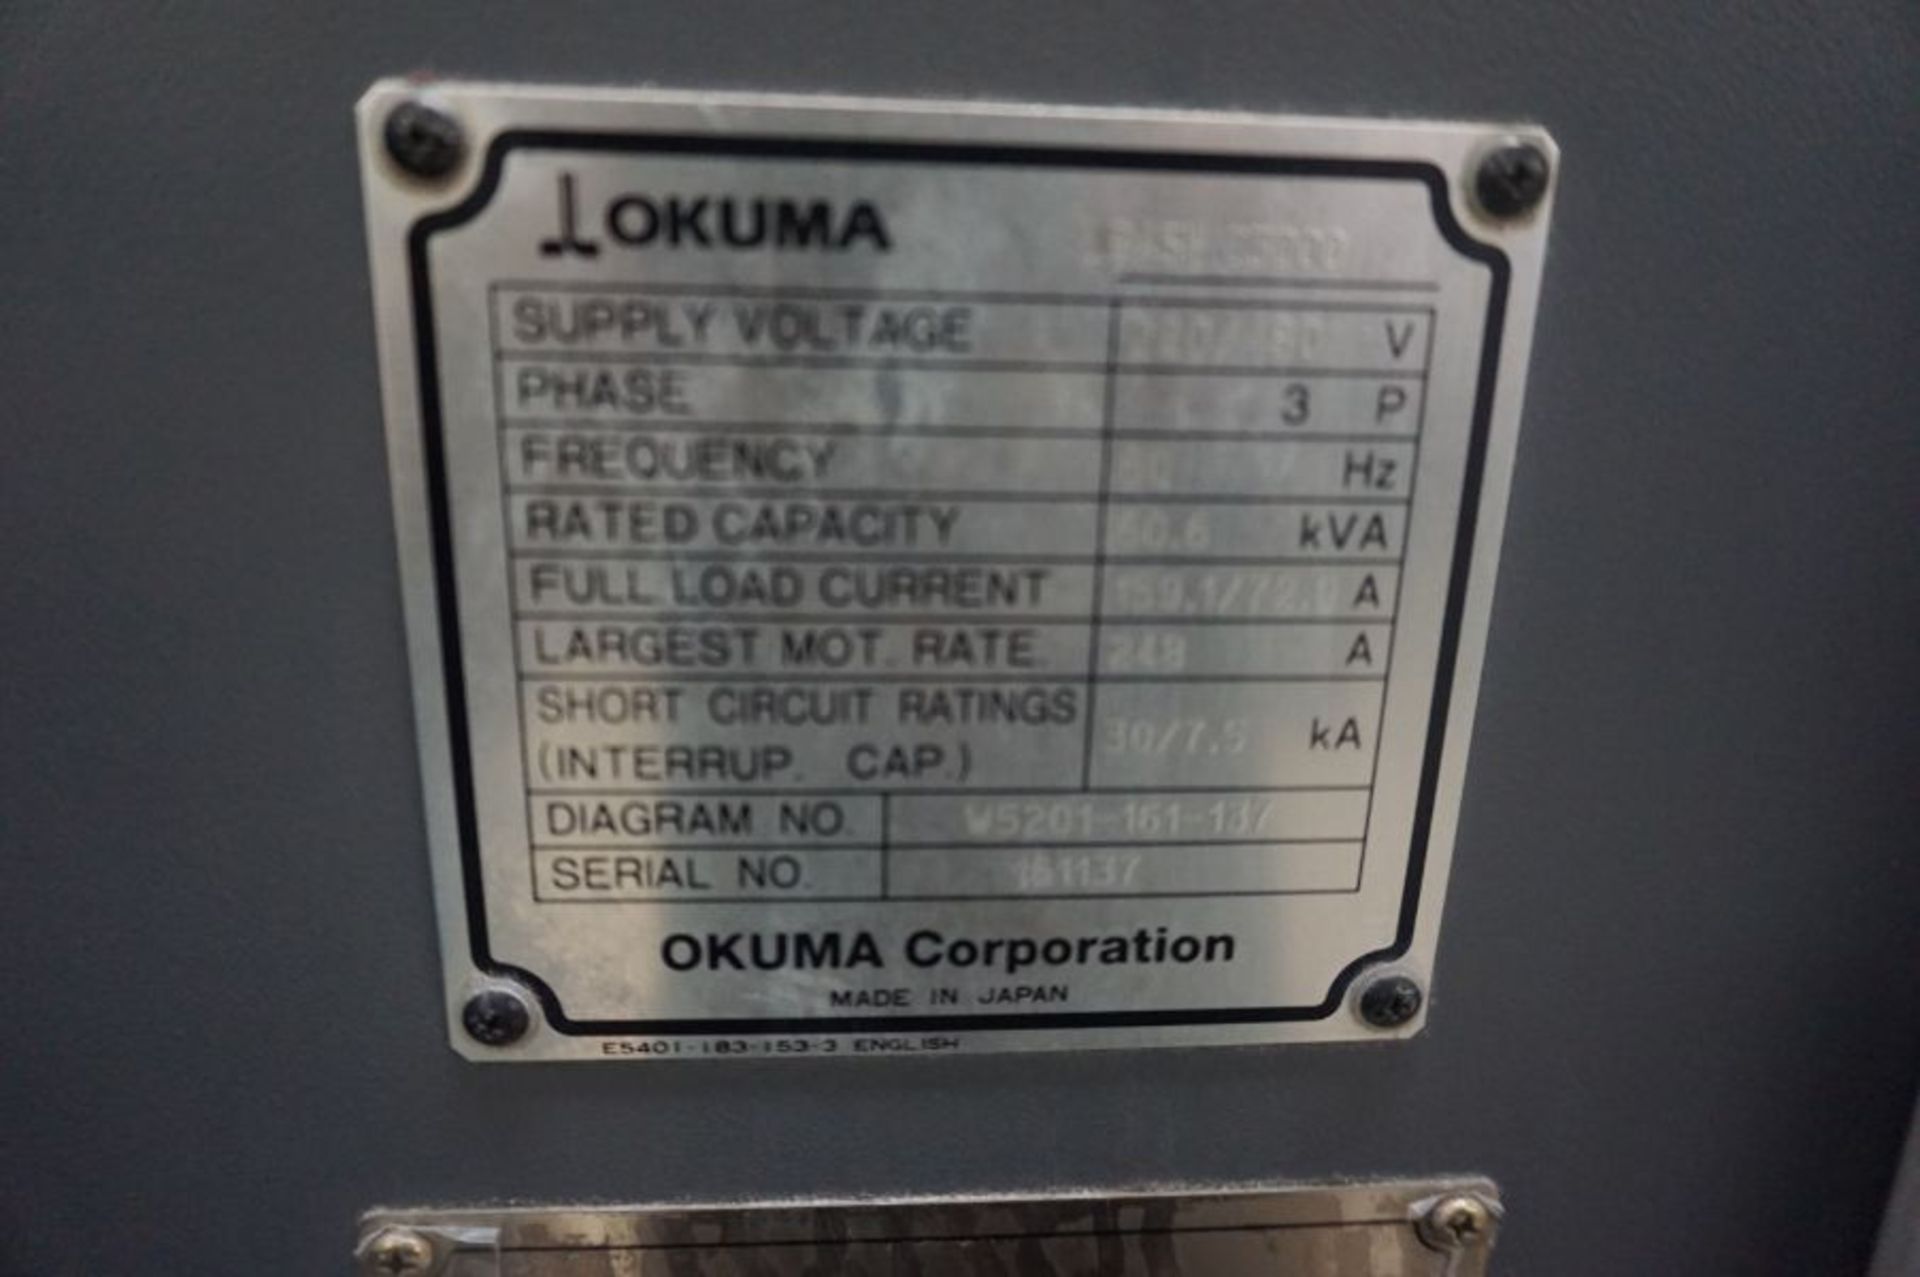 Okuma LB45IIR-C3000, OSP-P200LA-R Control, 10" Bore, Bison 25" 3 Jaw Chuck, 120" Centers - Image 13 of 13